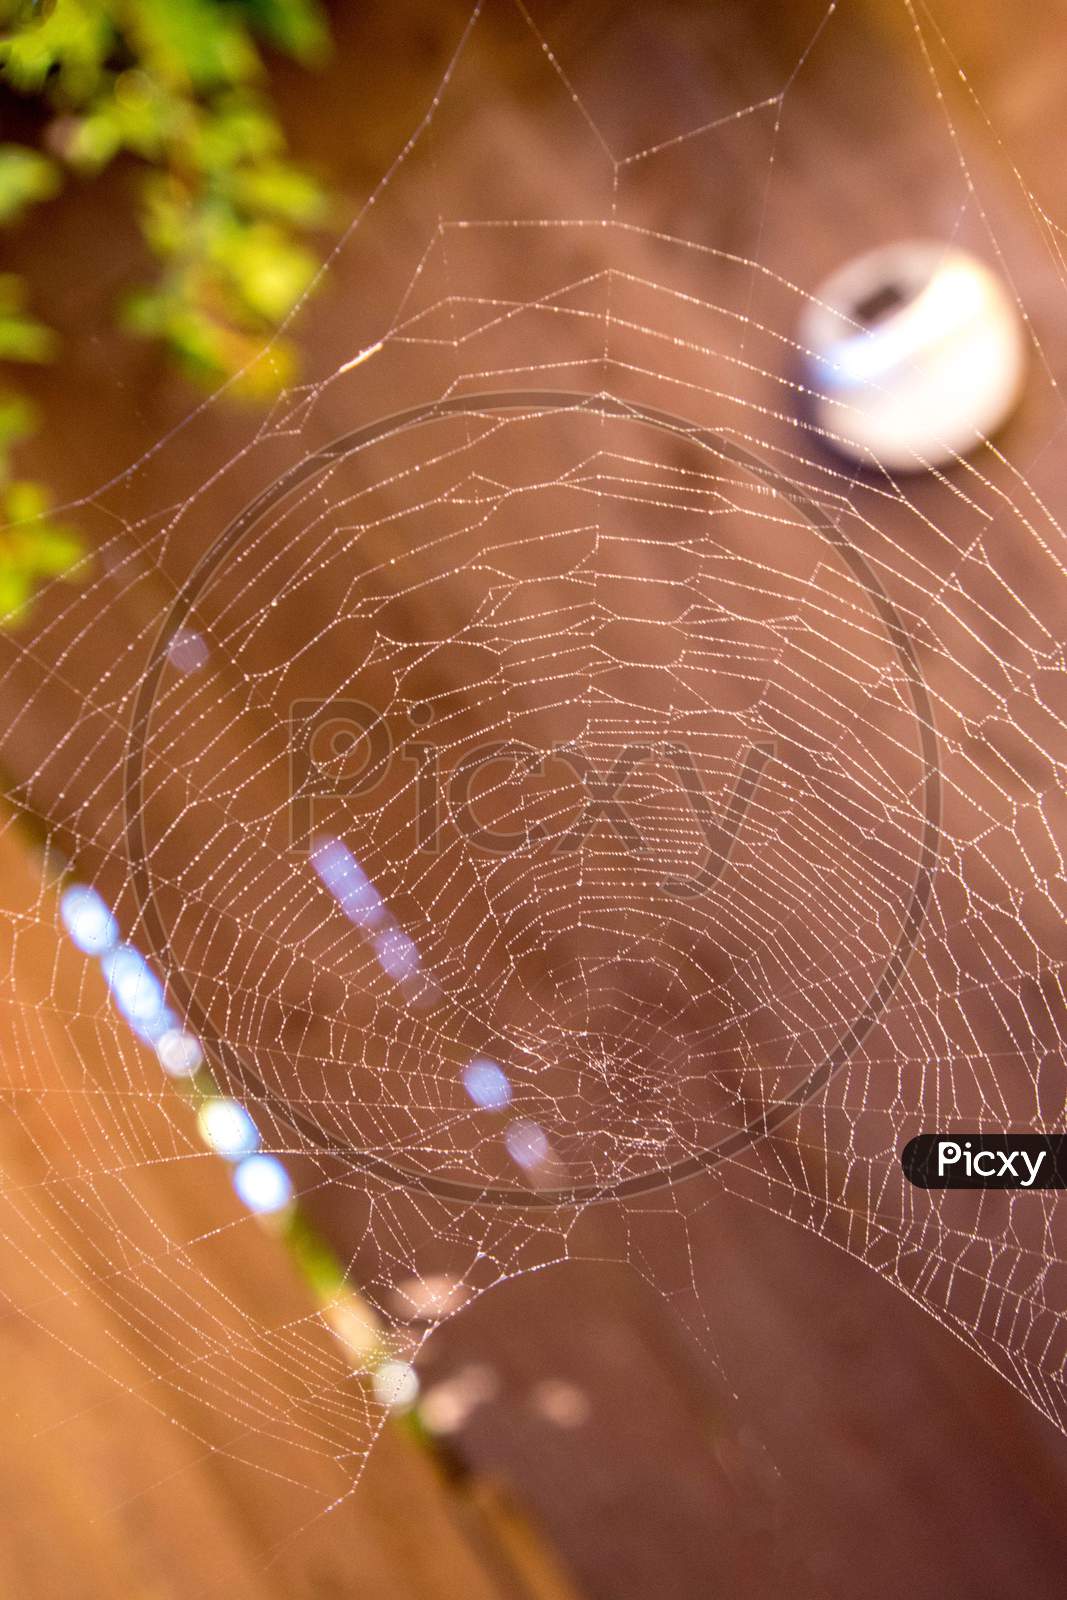 Spider Web Design